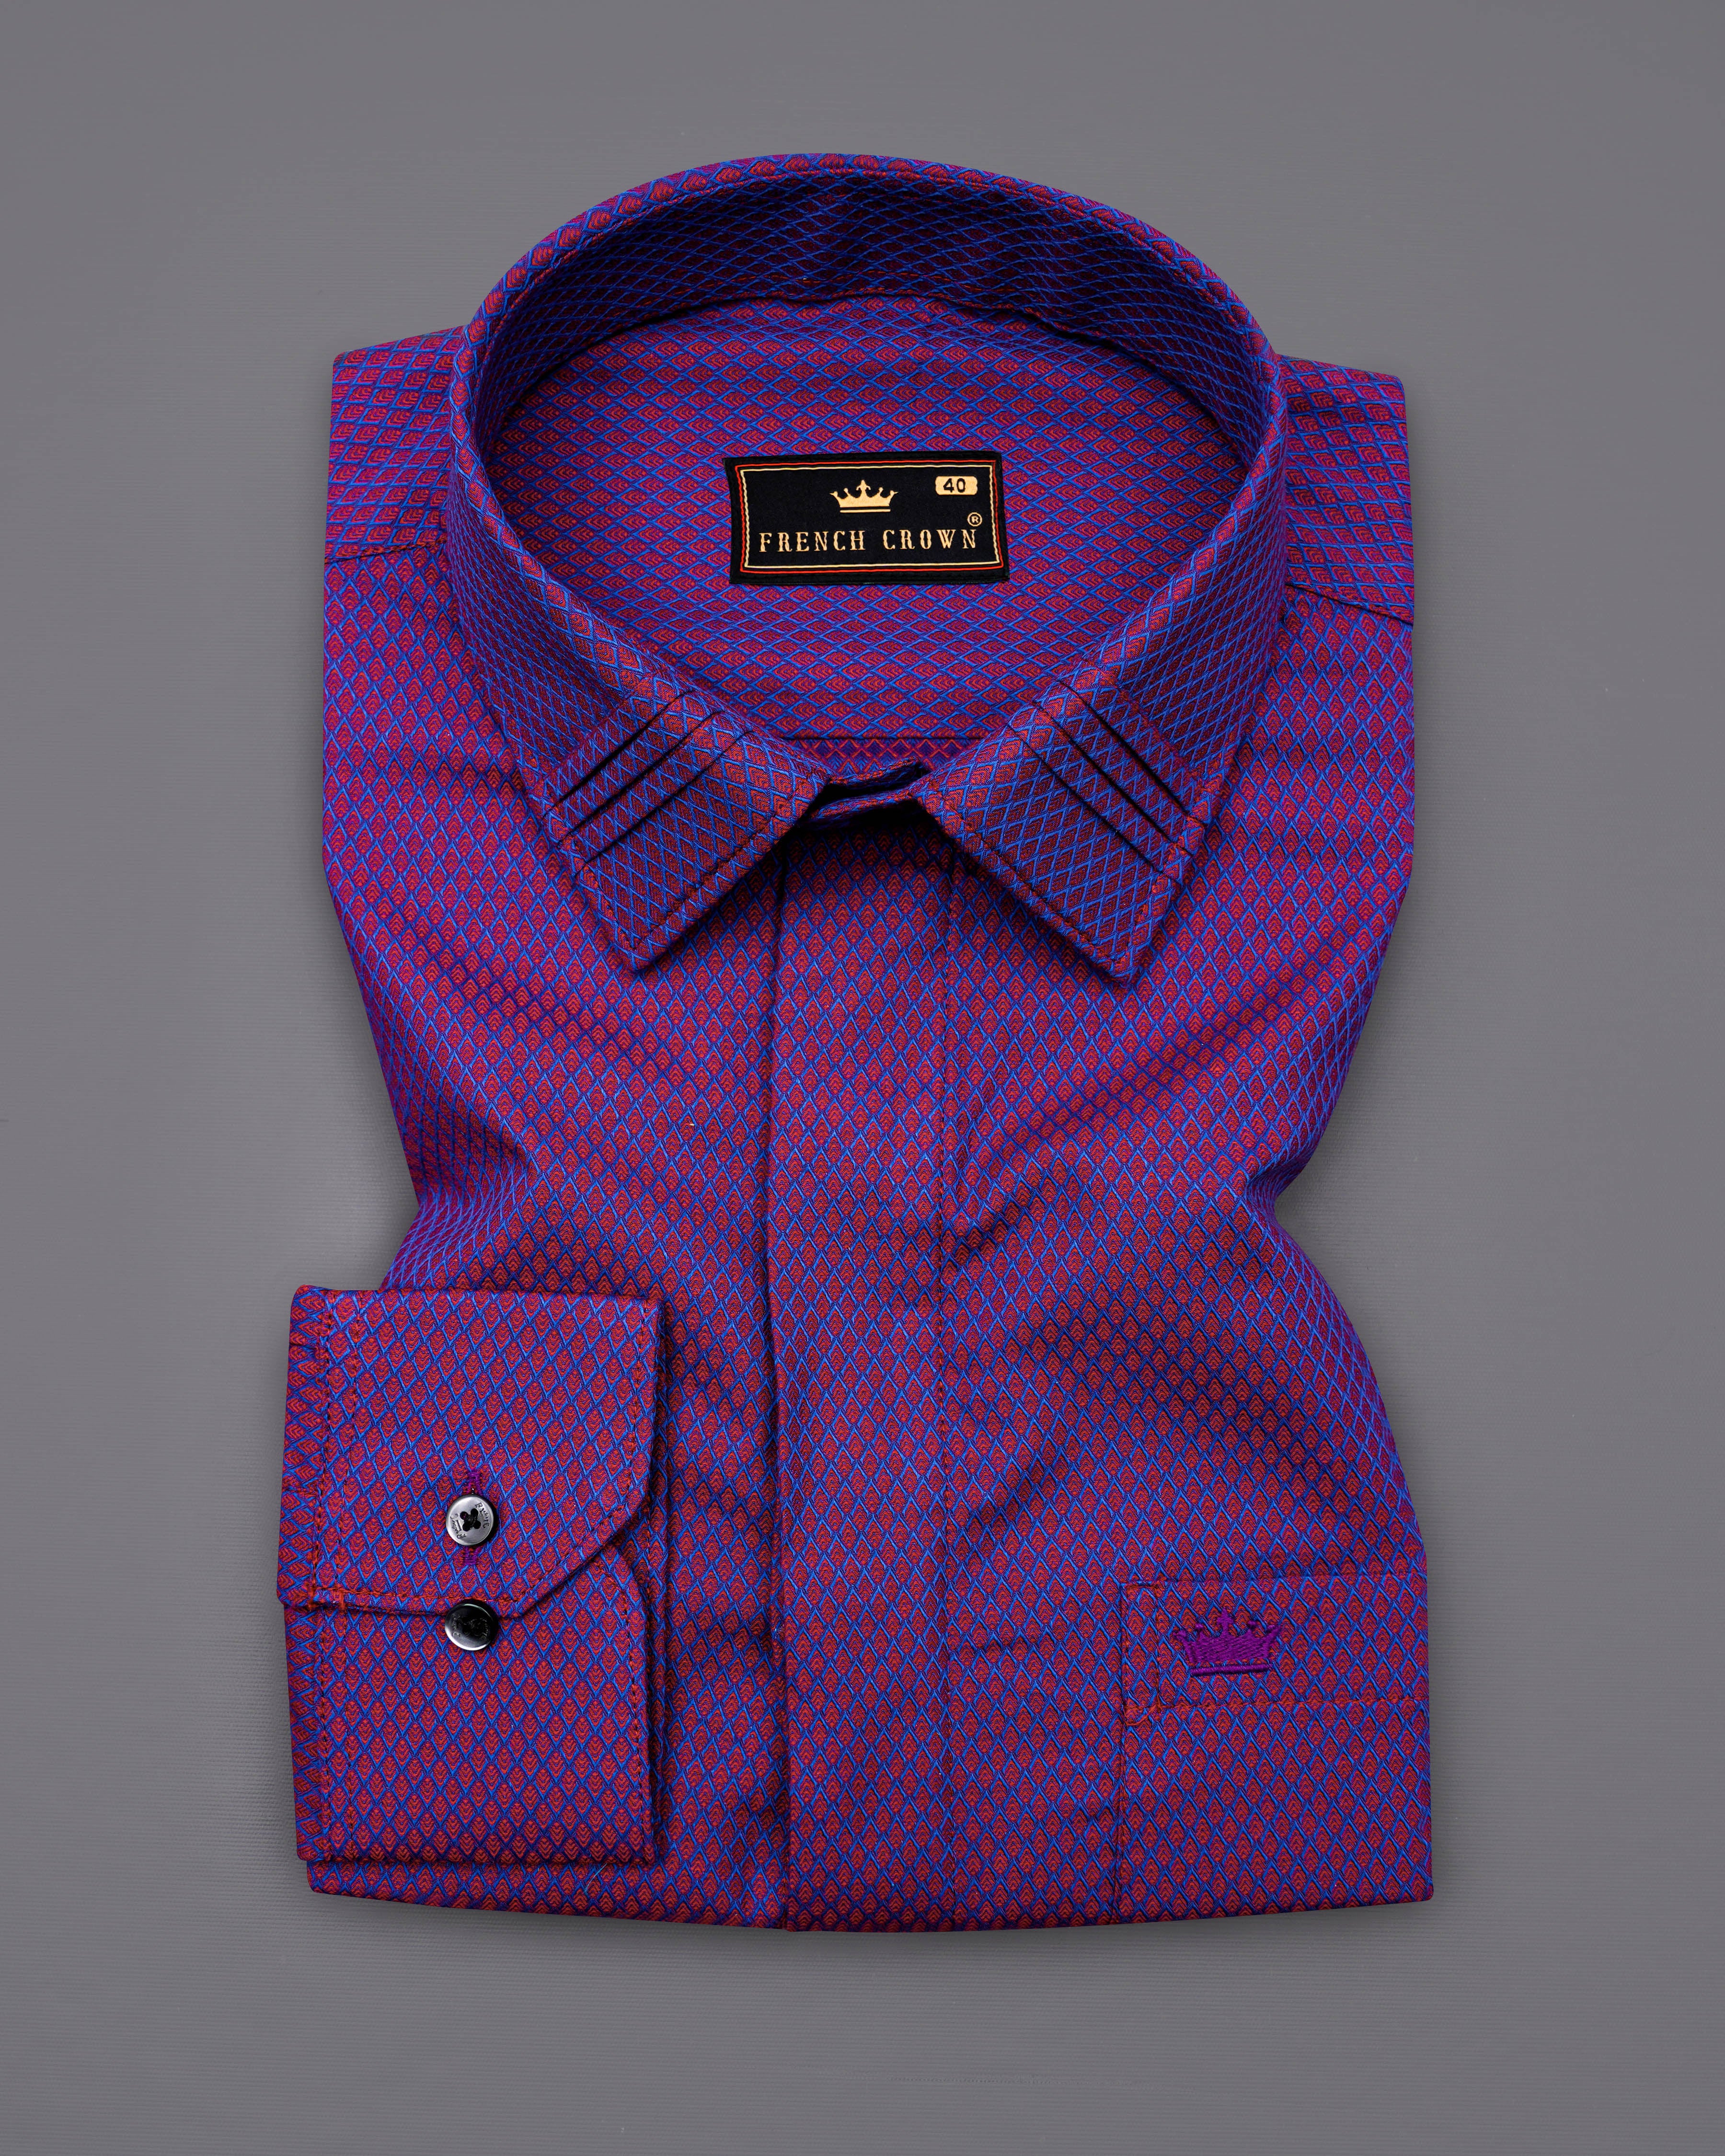 Seance Purple Jacquard Textured Premium Giza Cotton Shirt  8601-BLK-P405-38,8601-BLK-P405-H-38,8601-BLK-P405-39,8601-BLK-P405-H-39,8601-BLK-P405-40,8601-BLK-P405-H-40,8601-BLK-P405-42,8601-BLK-P405-H-42,8601-BLK-P405-44,8601-BLK-P405-H-44,8601-BLK-P405-46,8601-BLK-P405-H-46,8601-BLK-P405-48,8601-BLK-P405-H-48,8601-BLK-P405-50,8601-BLK-P405-H-50,8601-BLK-P405-52,8601-BLK-P405-H-52